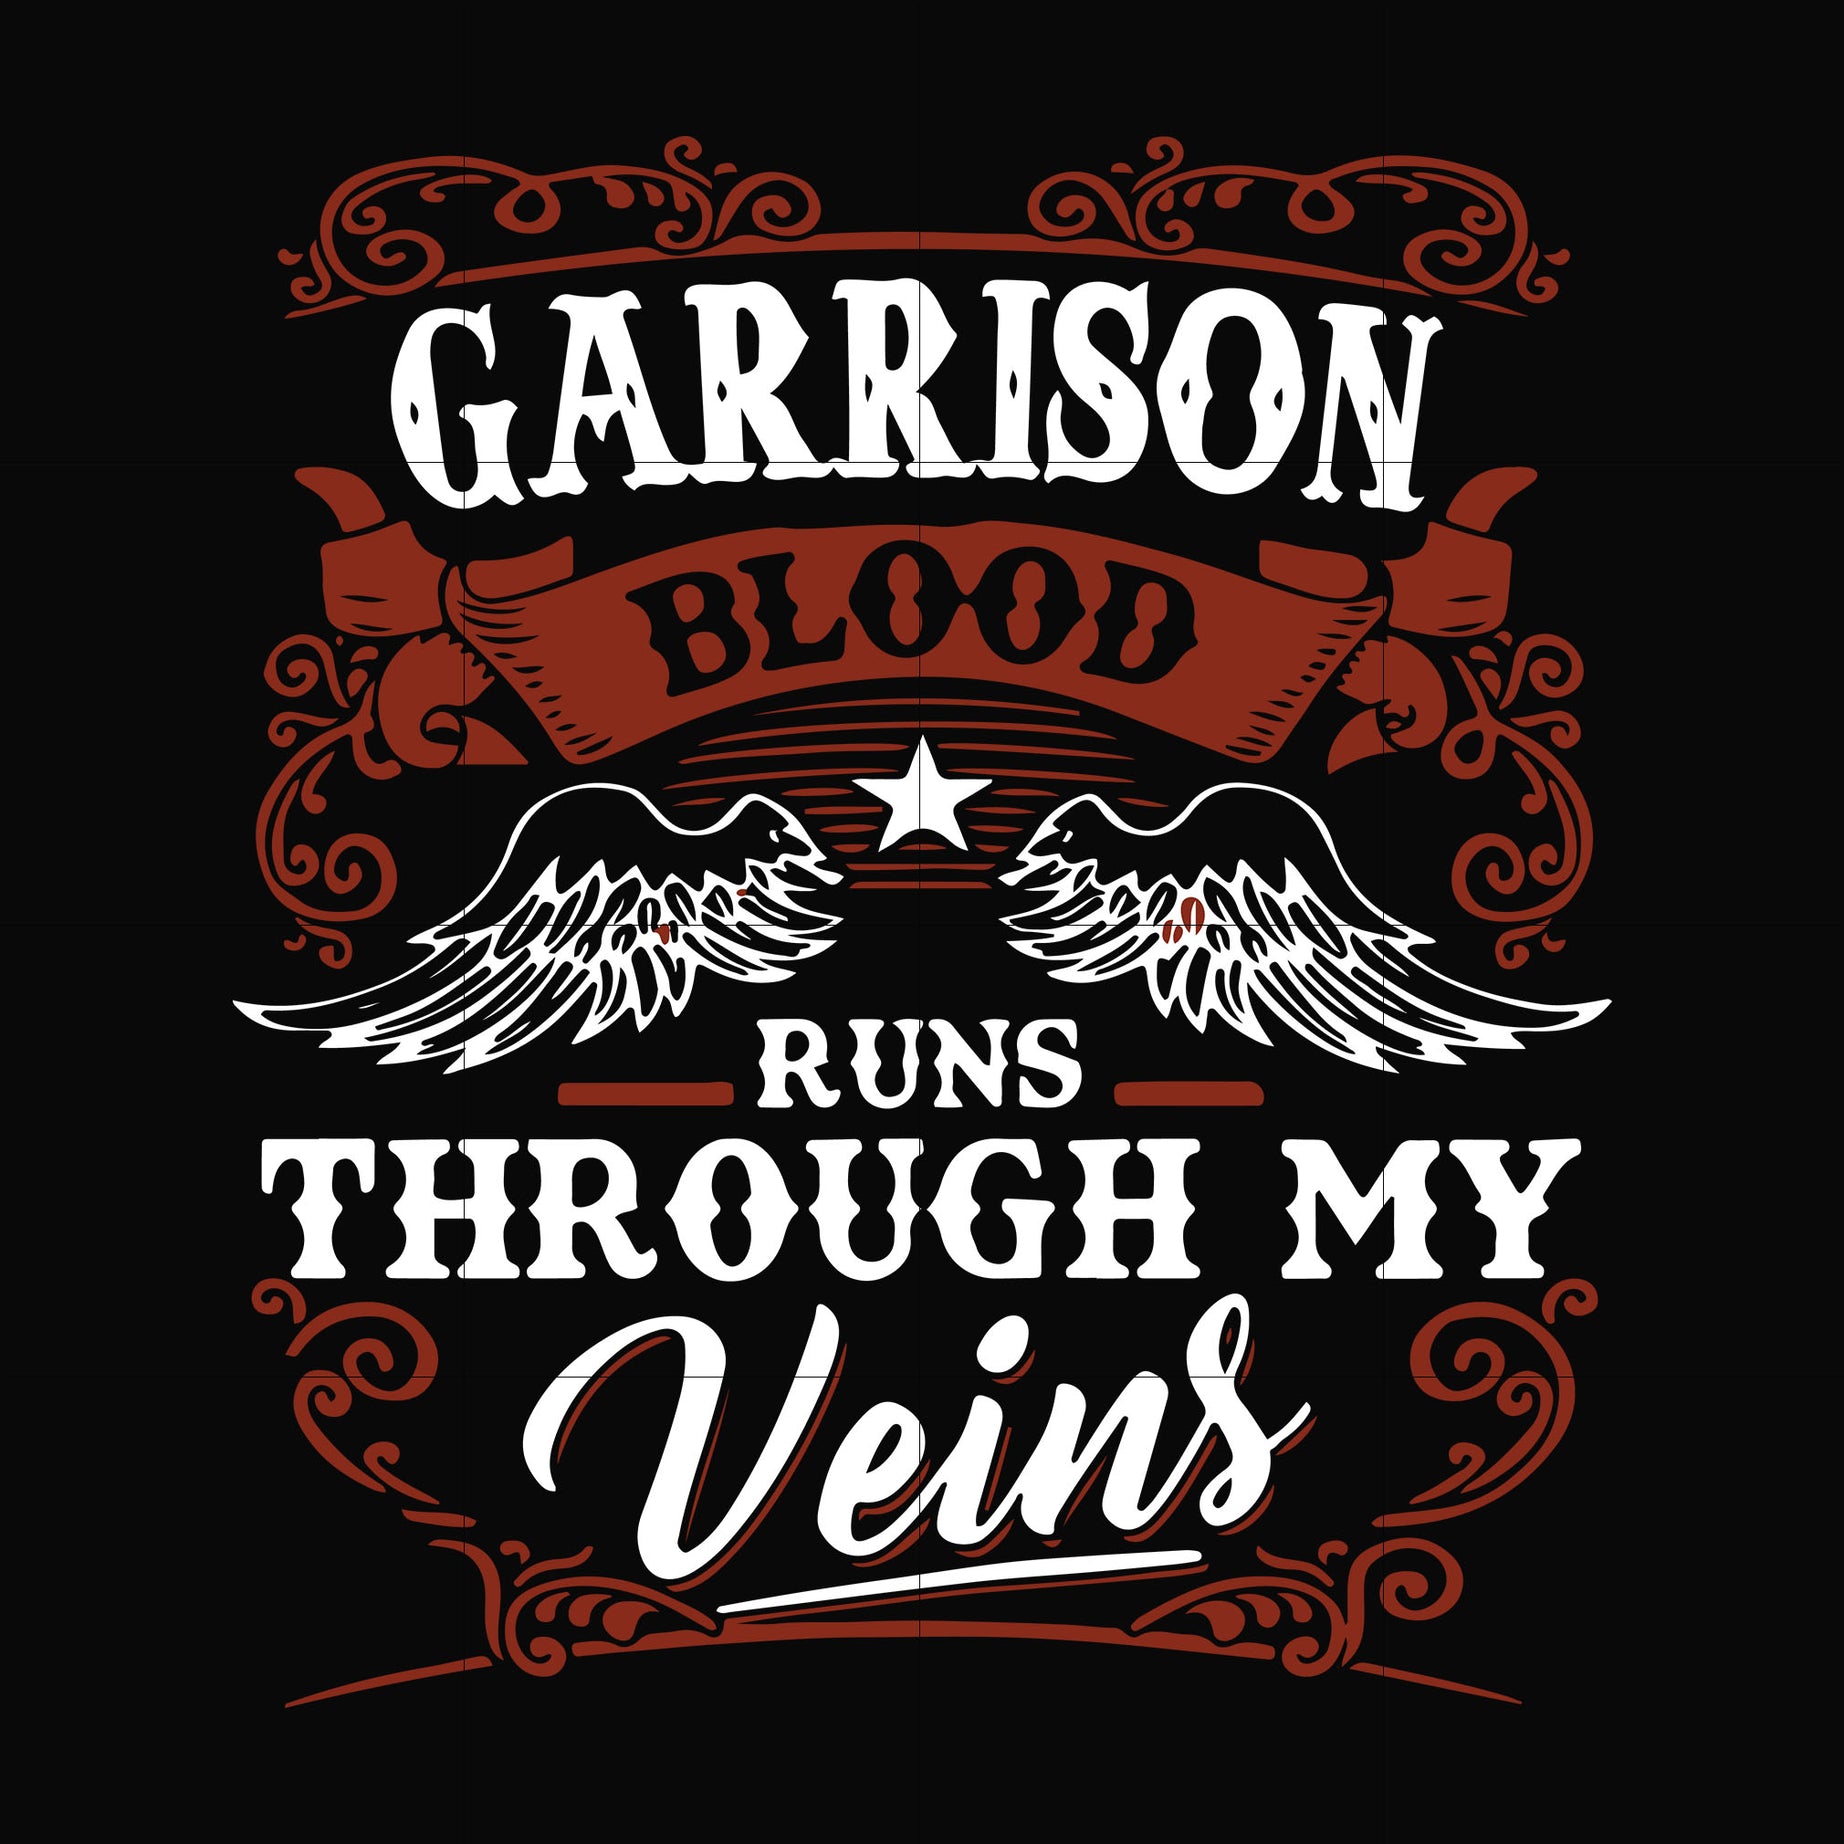 Garrison blood runs through my veins svg, png, dxf, eps file FN000346